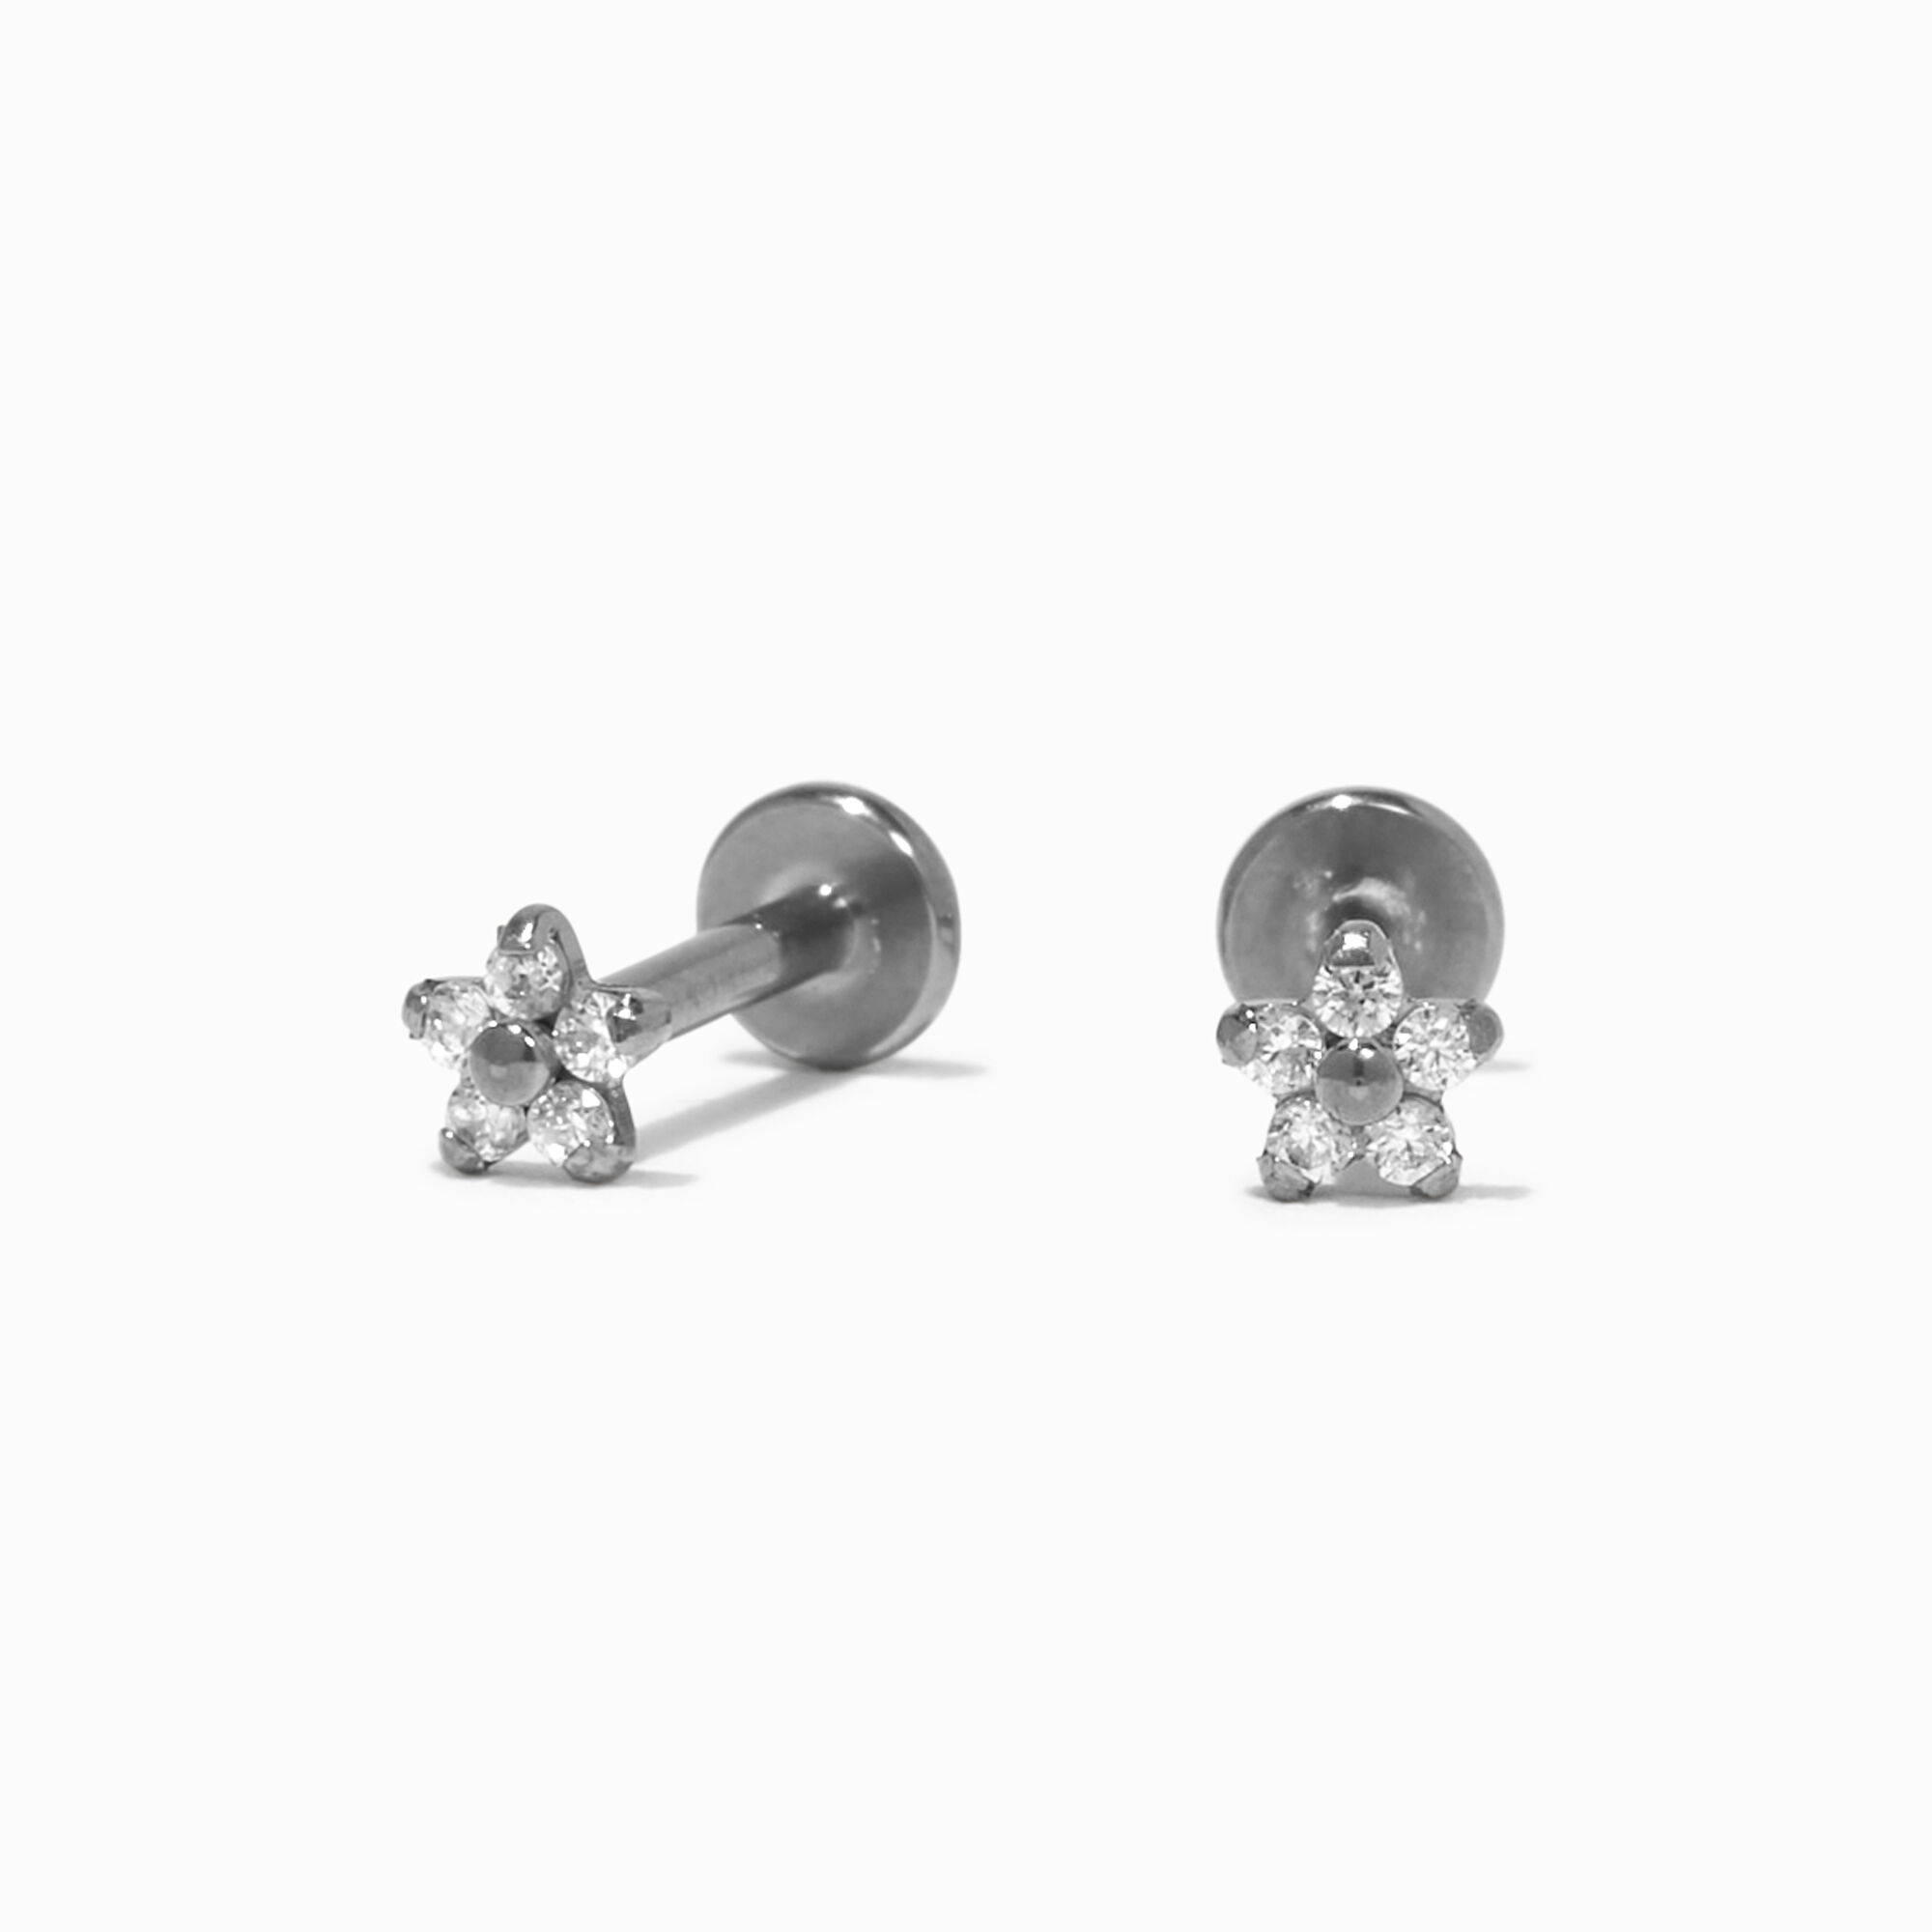 Titanium Pink Daisy Flower Screw Flat Back Stud Earrings, Non Tarnish Earrings, Implant Grade Titanium Waterproof Earrings, Minimal Earrings